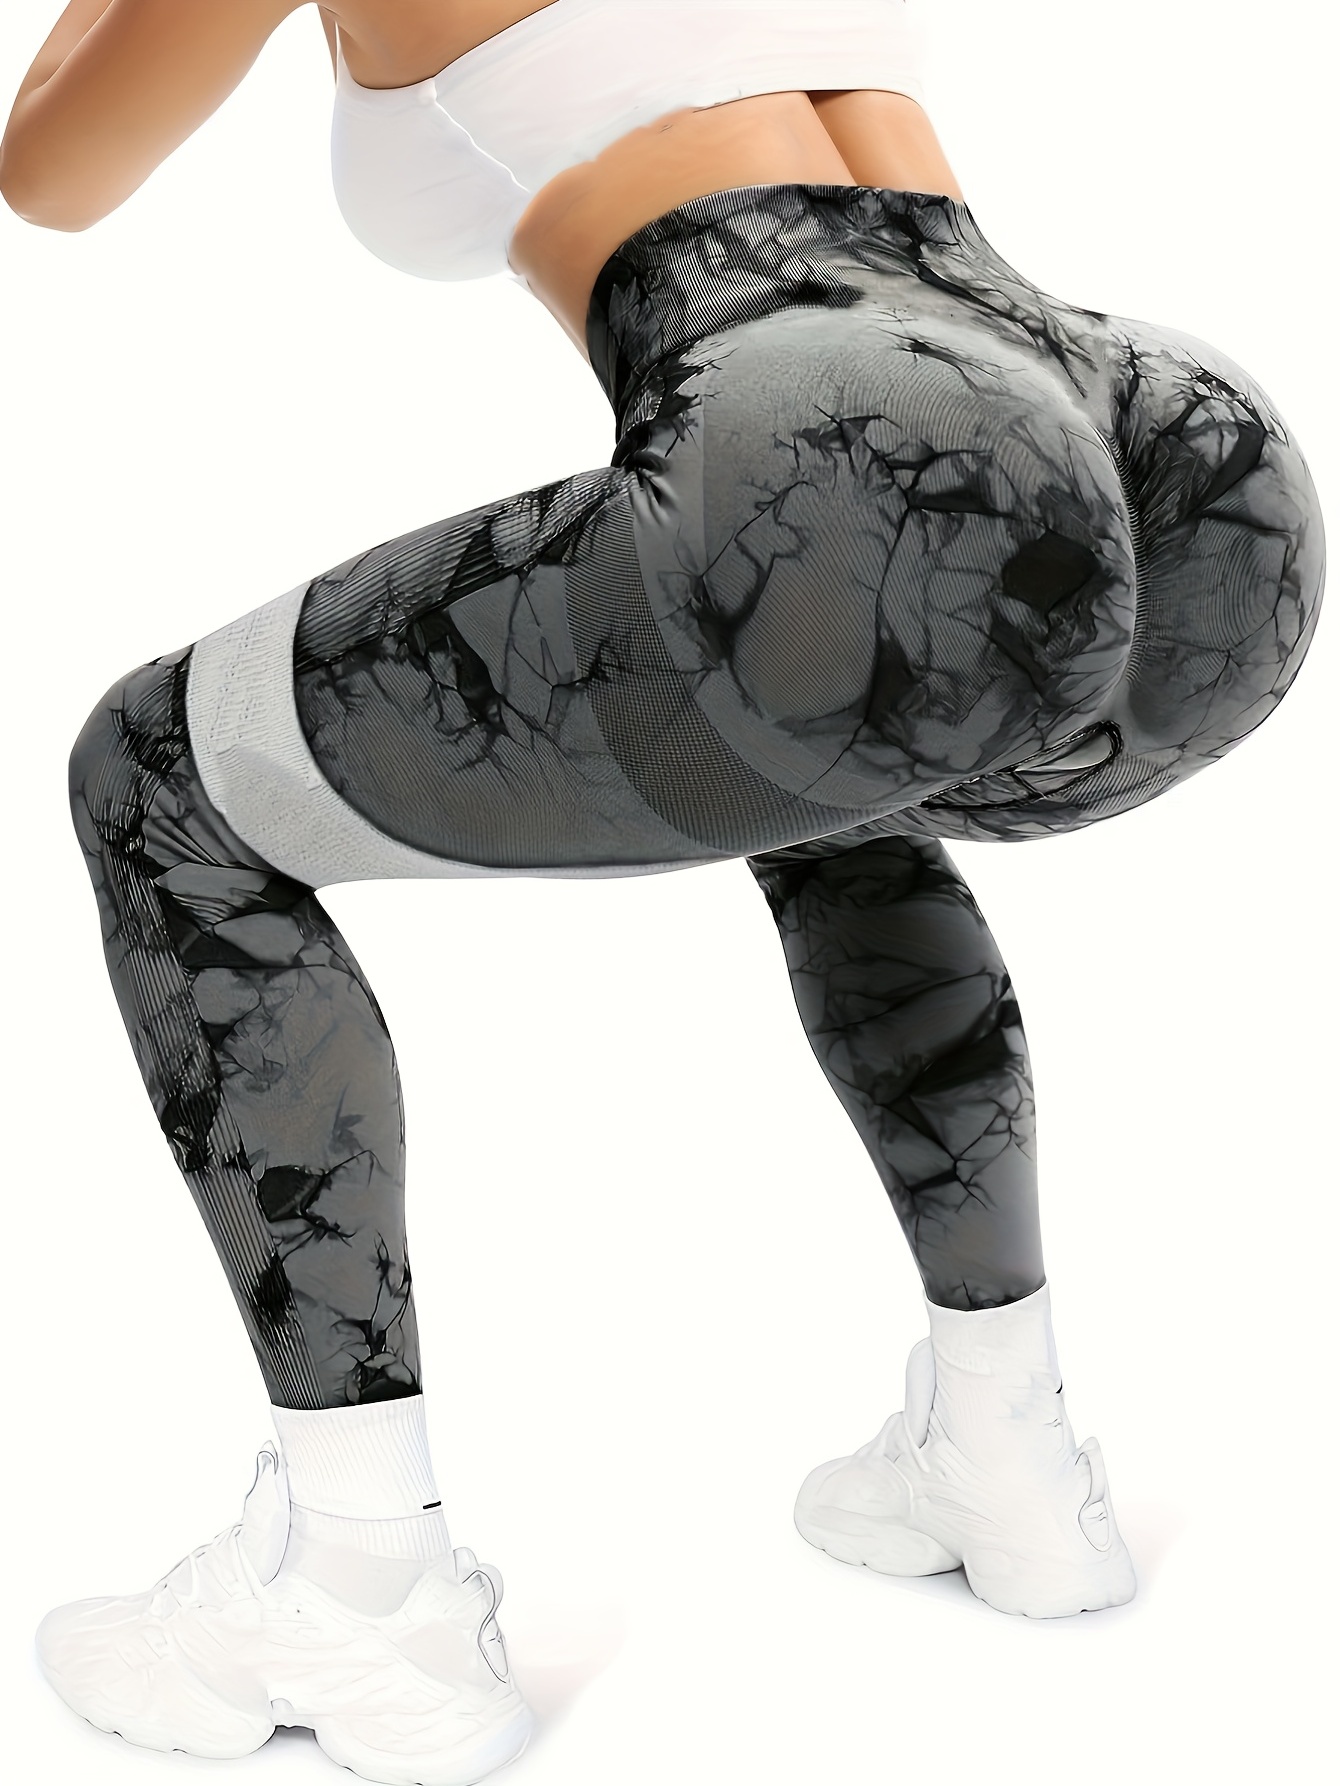 Baocc Yoga Pants Women Seamless Tie Dye and Tie Float Yoga Workout